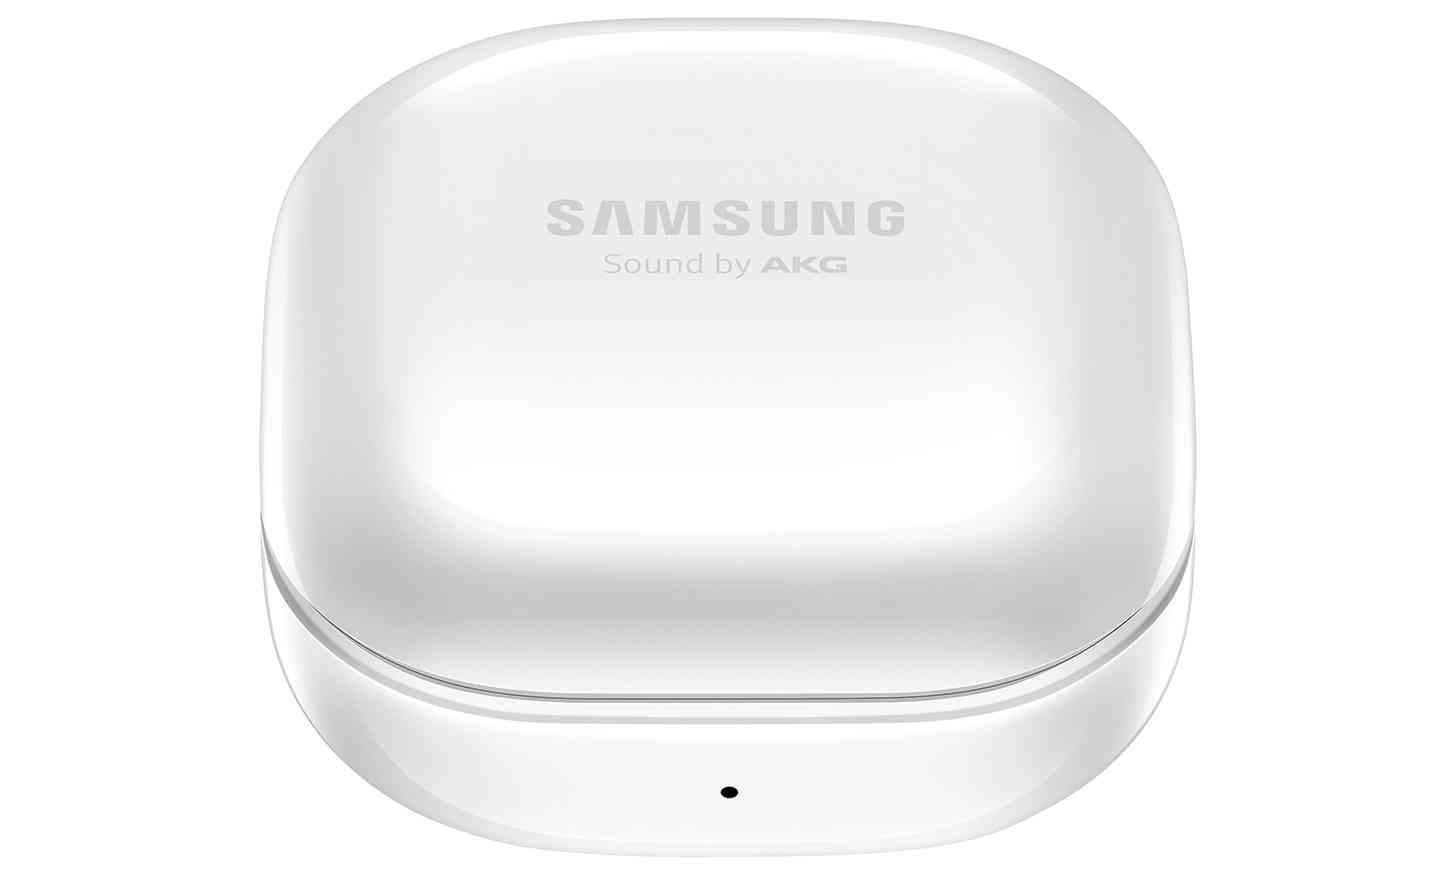 Samsung Galaxy Buds Live charging case leak